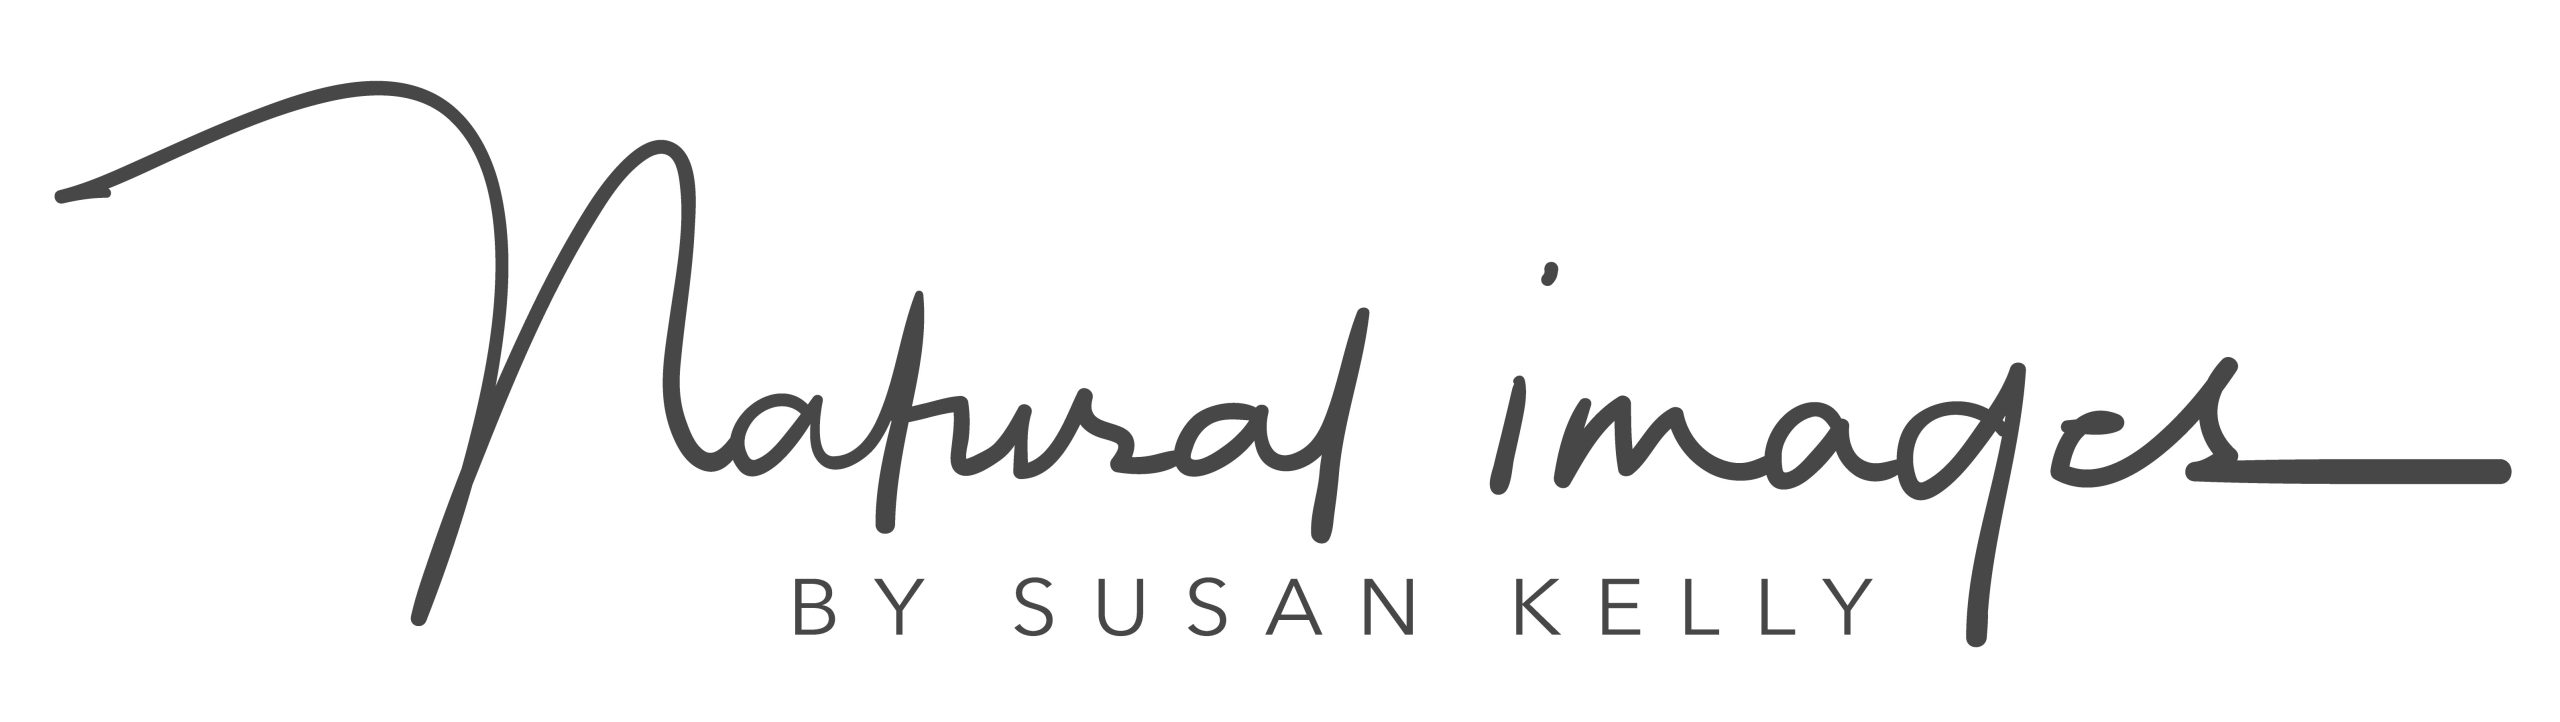 Susan Kelly – Natural Images by Susan Kelly